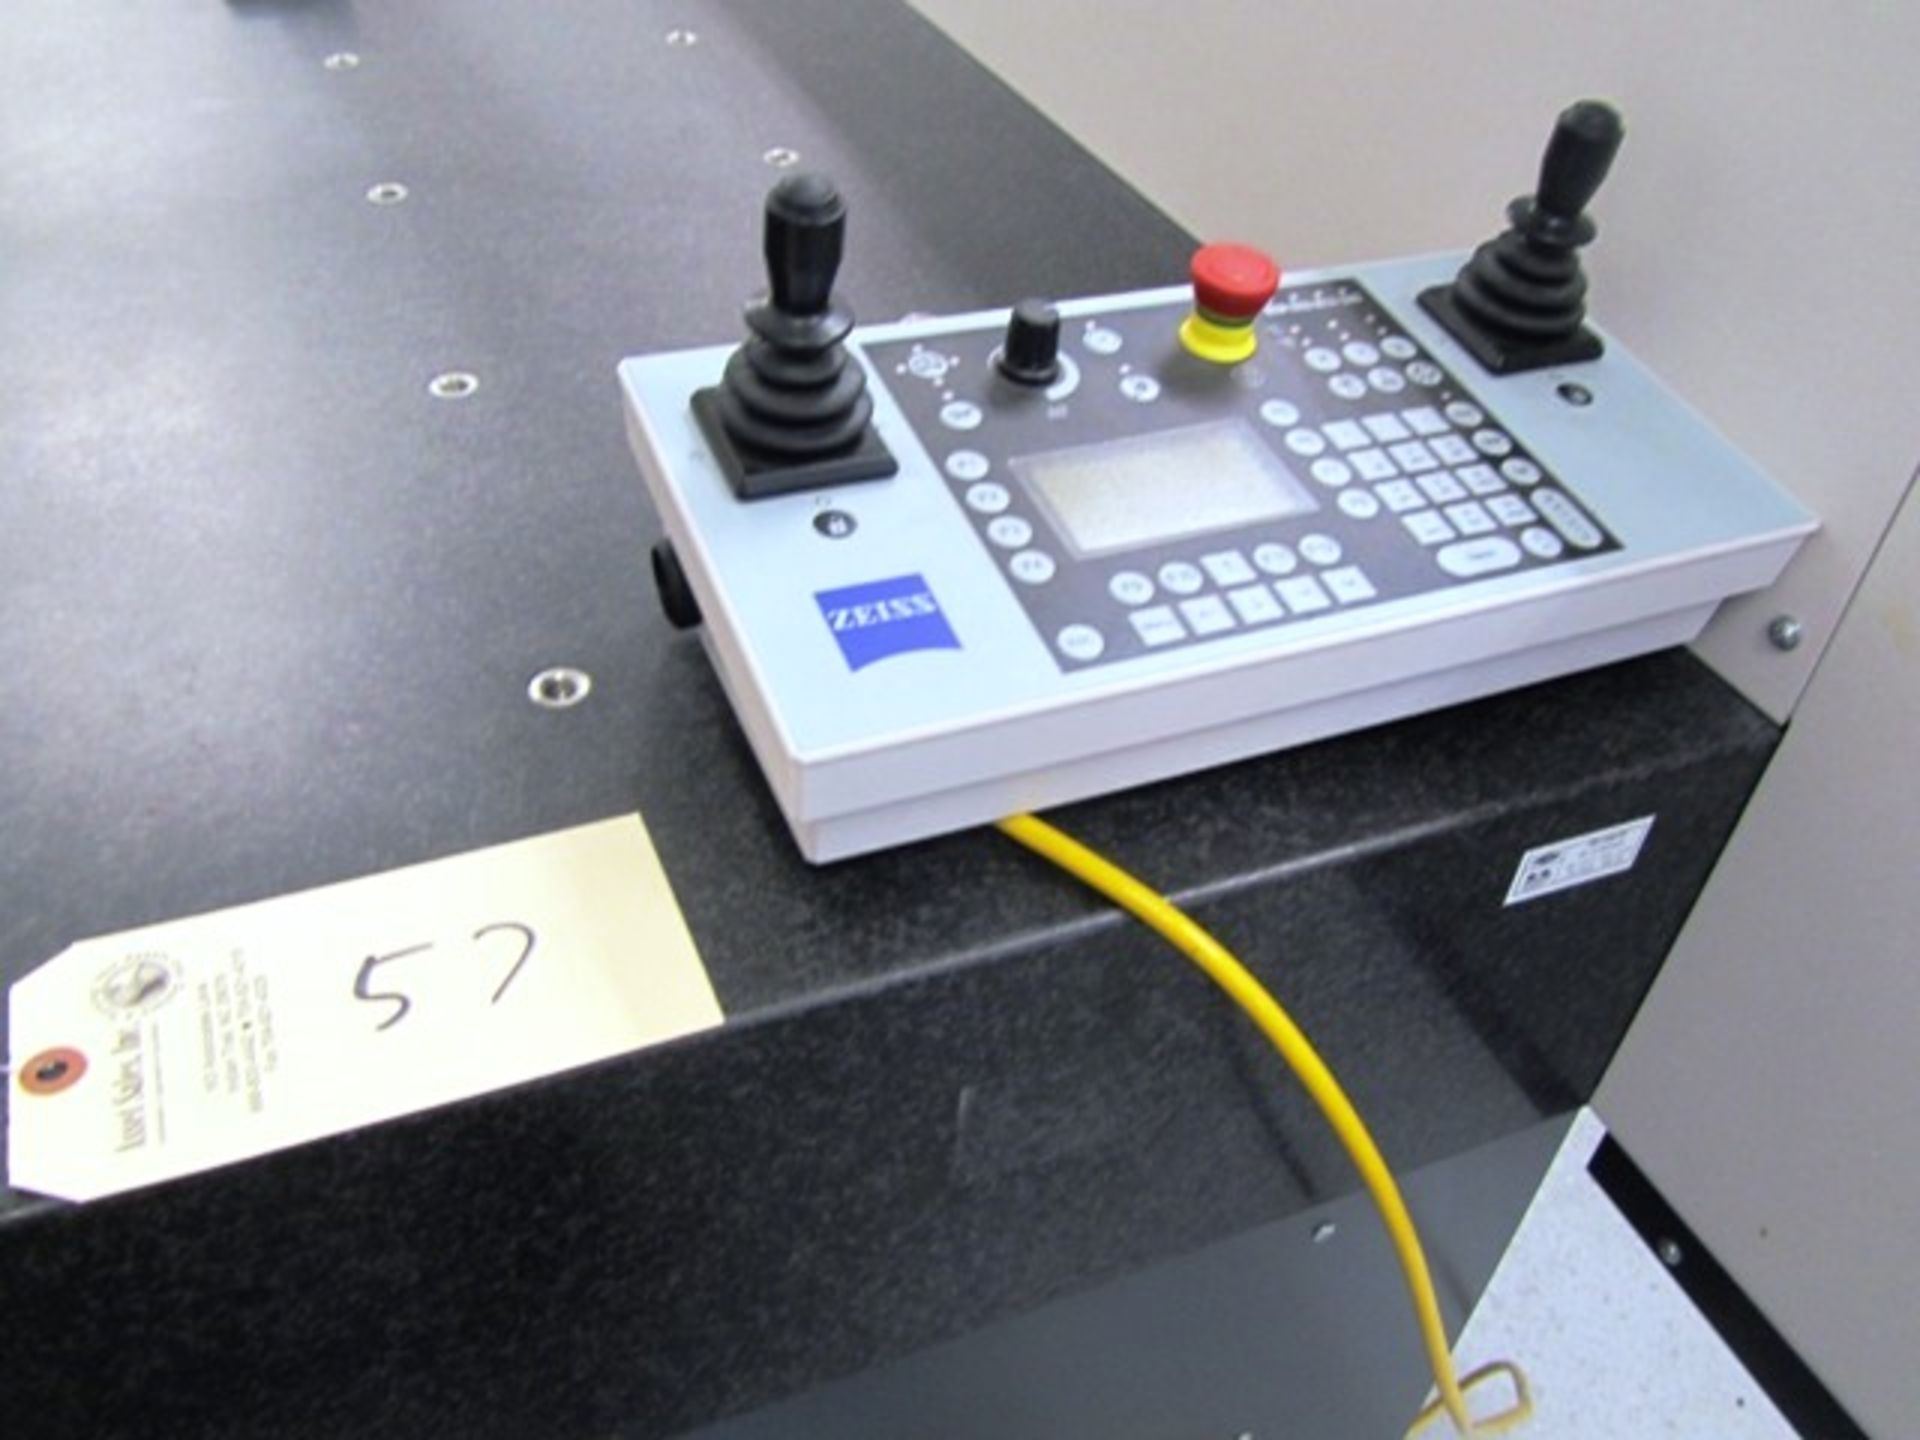 Zeiss Contura G2 7/10/6 RDS Coordinate Measuring Machine with Scanning, Vast XXT Motorized Probe - Image 2 of 5